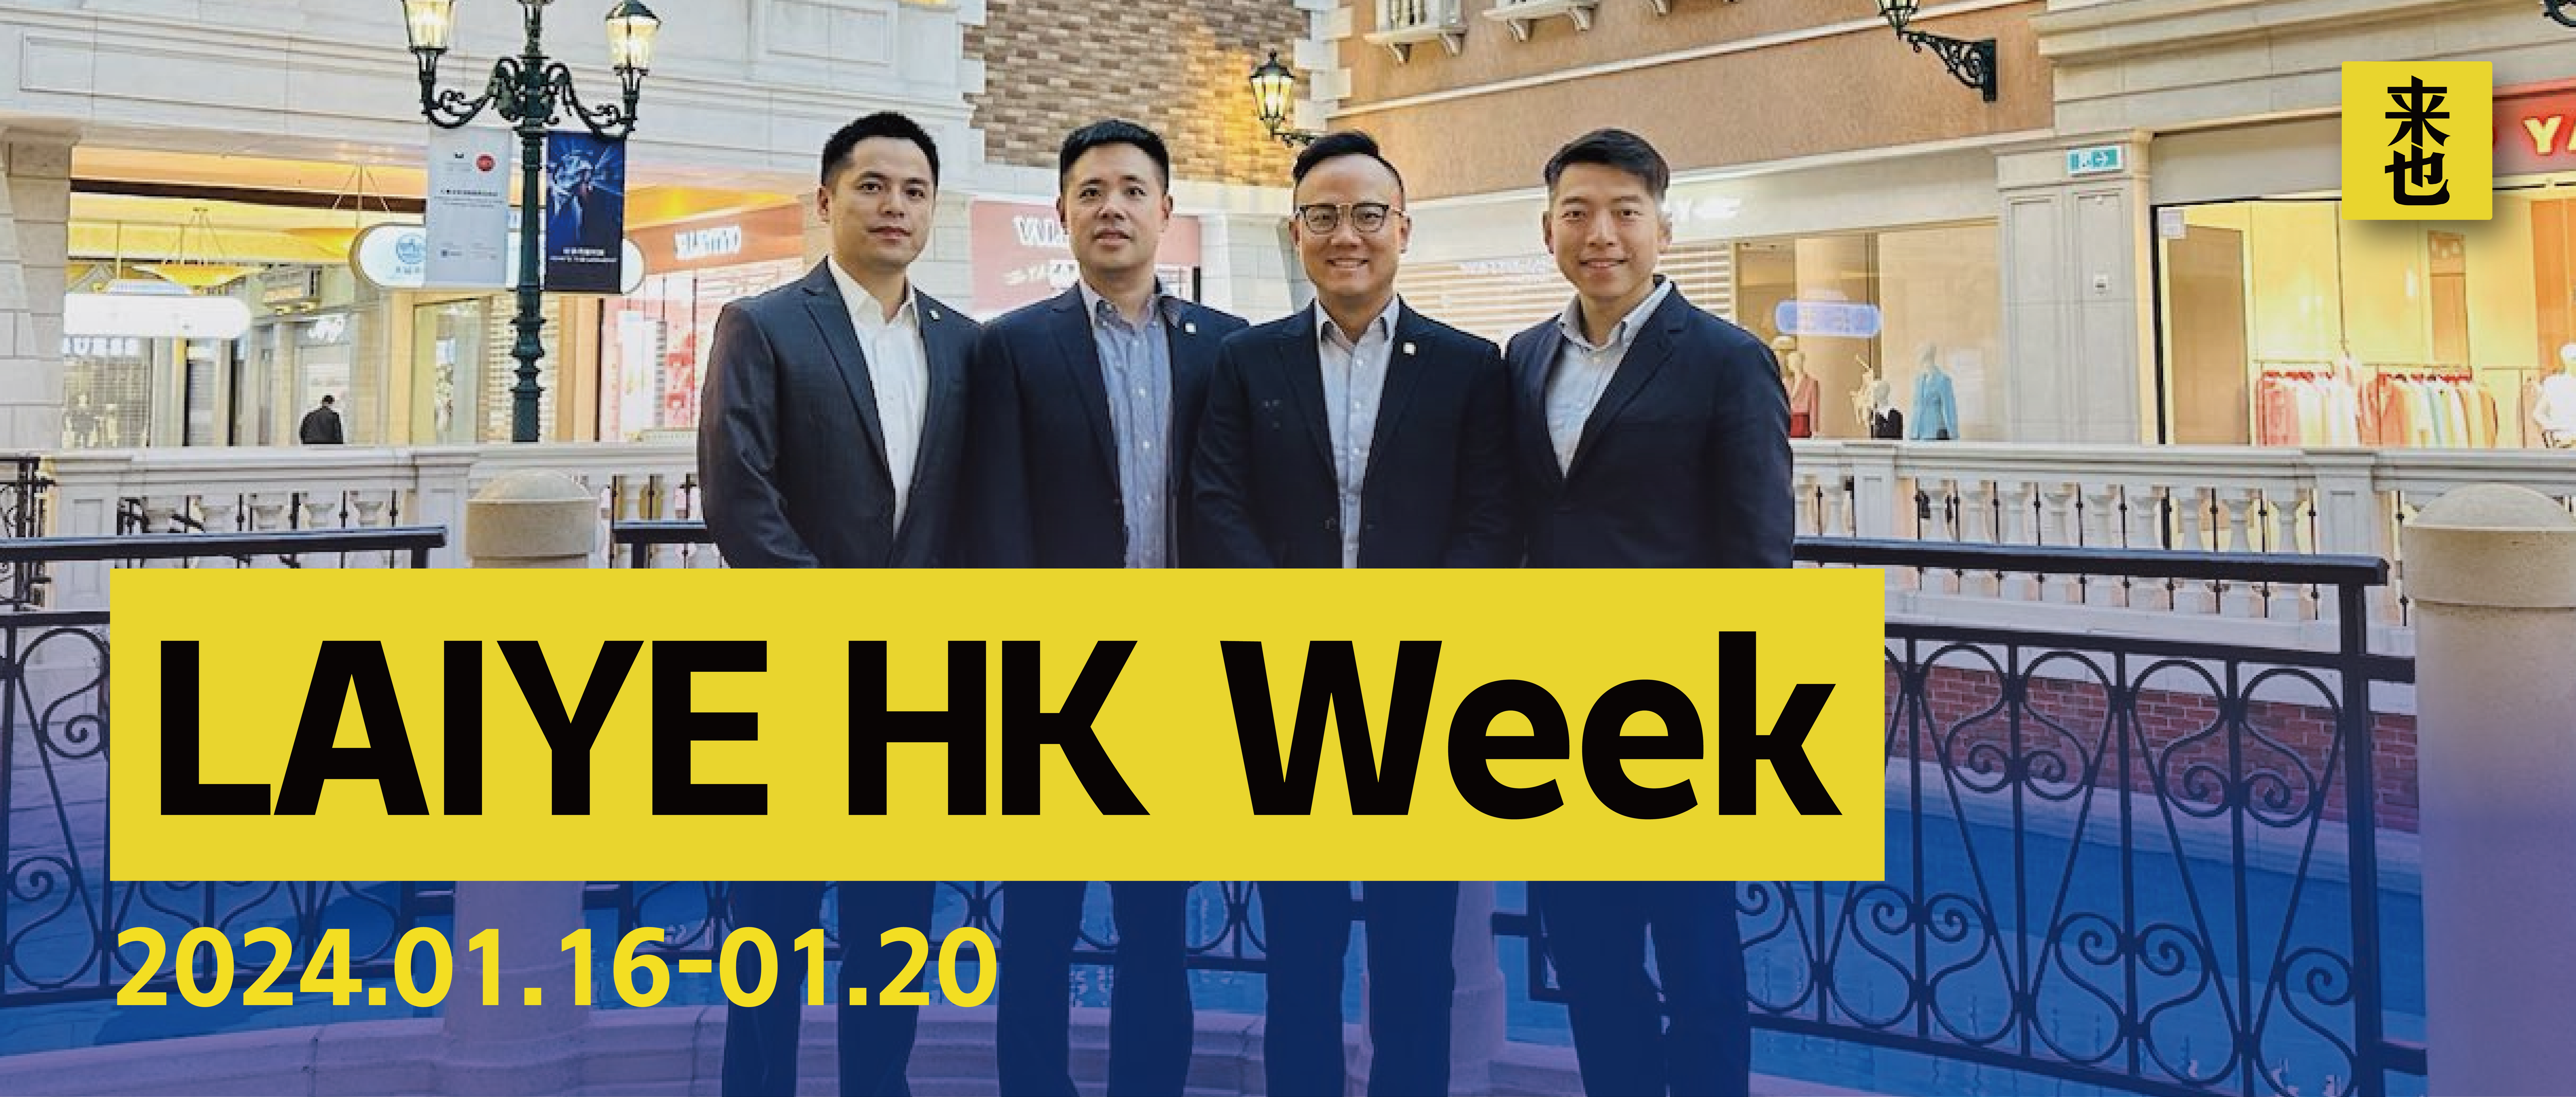 HK Week 2.0｜大湾区City walk开启2024智能助理产业发展新地图